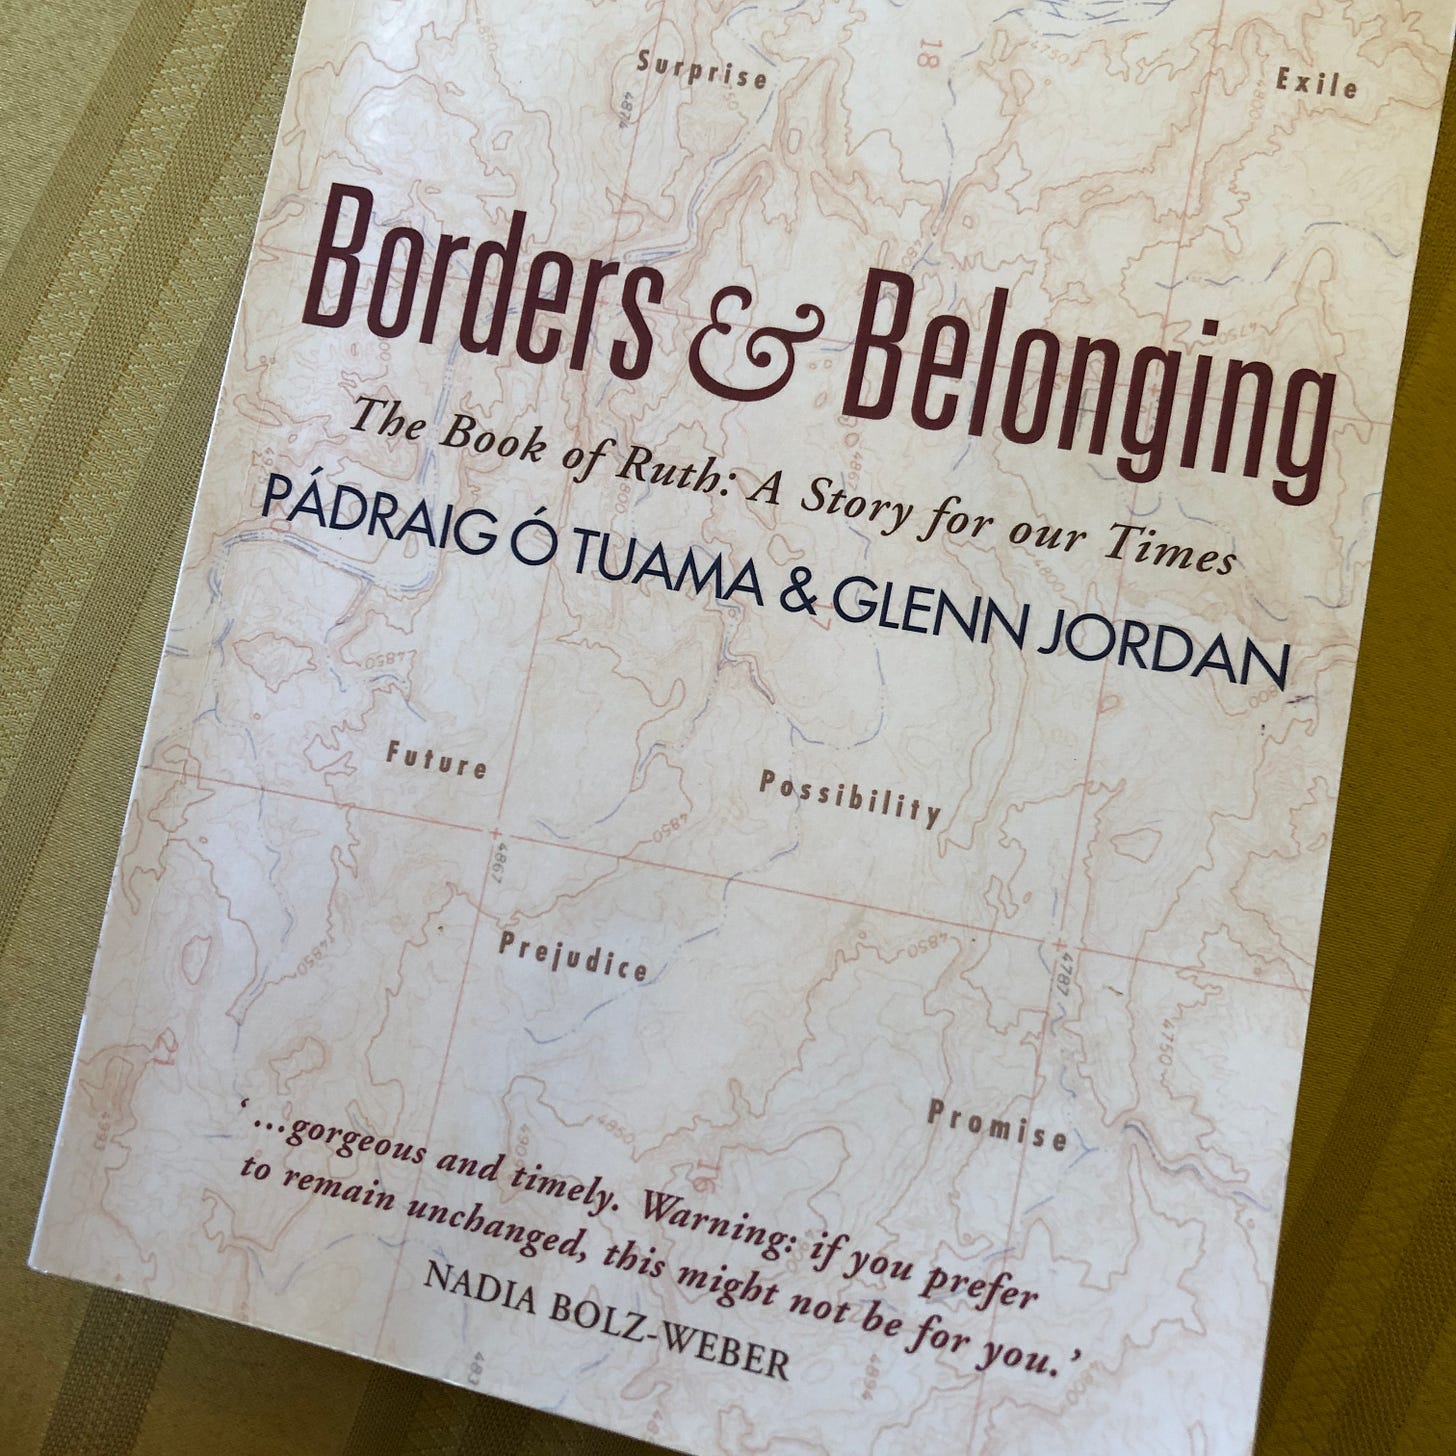 Cover of book “Borders & Belonging”